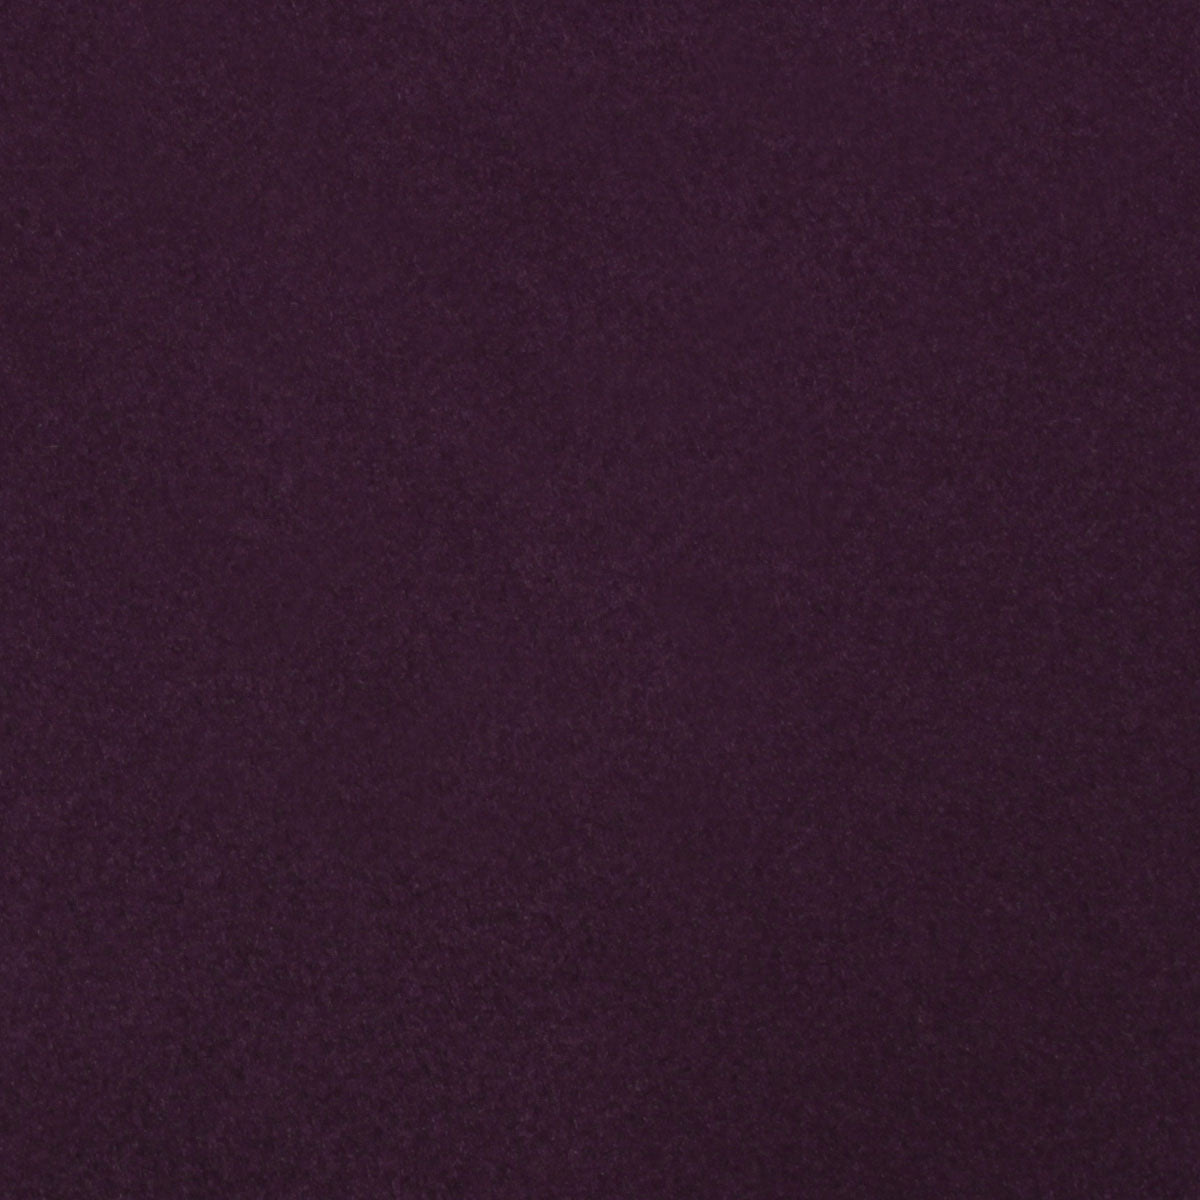 Plum Purple Velvet Fabric Bow Tie